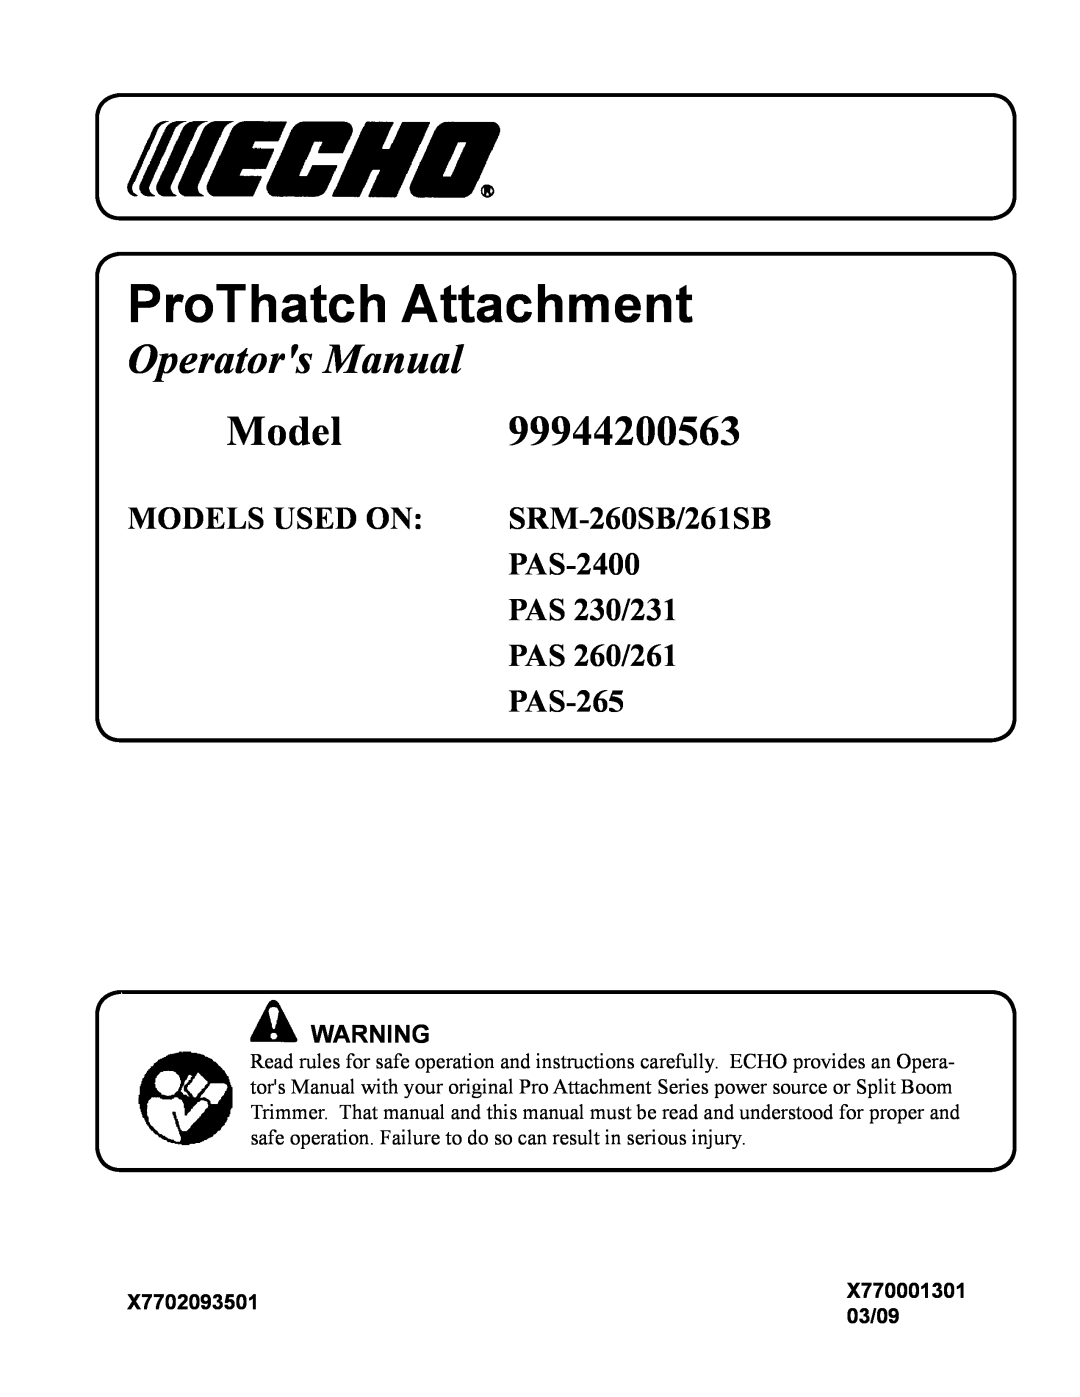 Echo 99944200563 manual X7702093501, 03/09, ProThatch Attachment, Operators Manual, Models Used On, SRM-260SB/261SB 